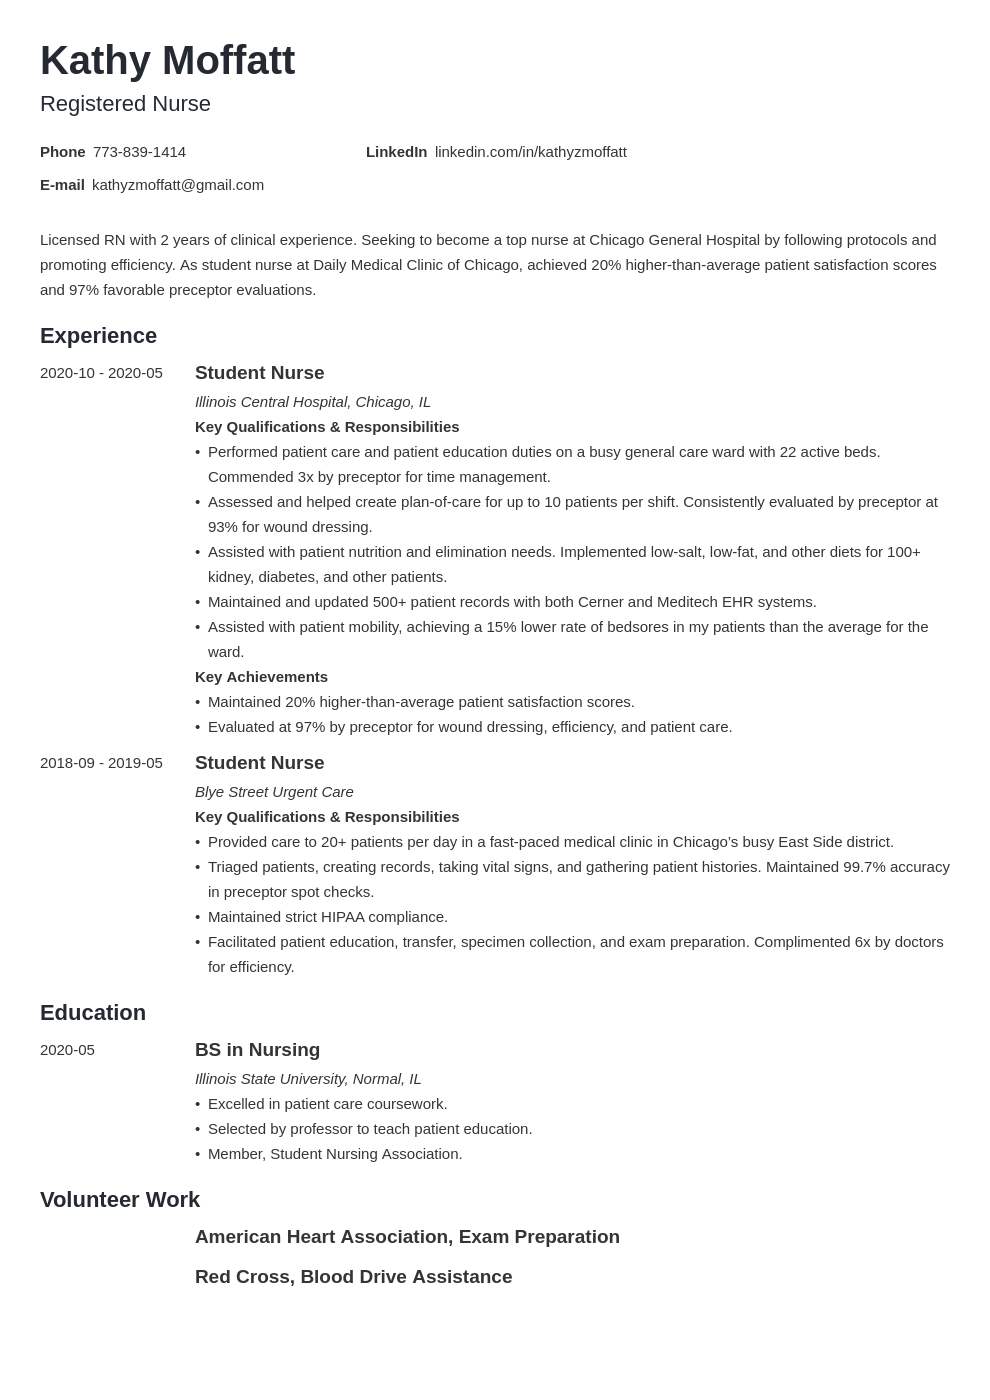 templates-rn-resume-template-registered-nurse-resume-template-nurse-resume-template-nurse-cv